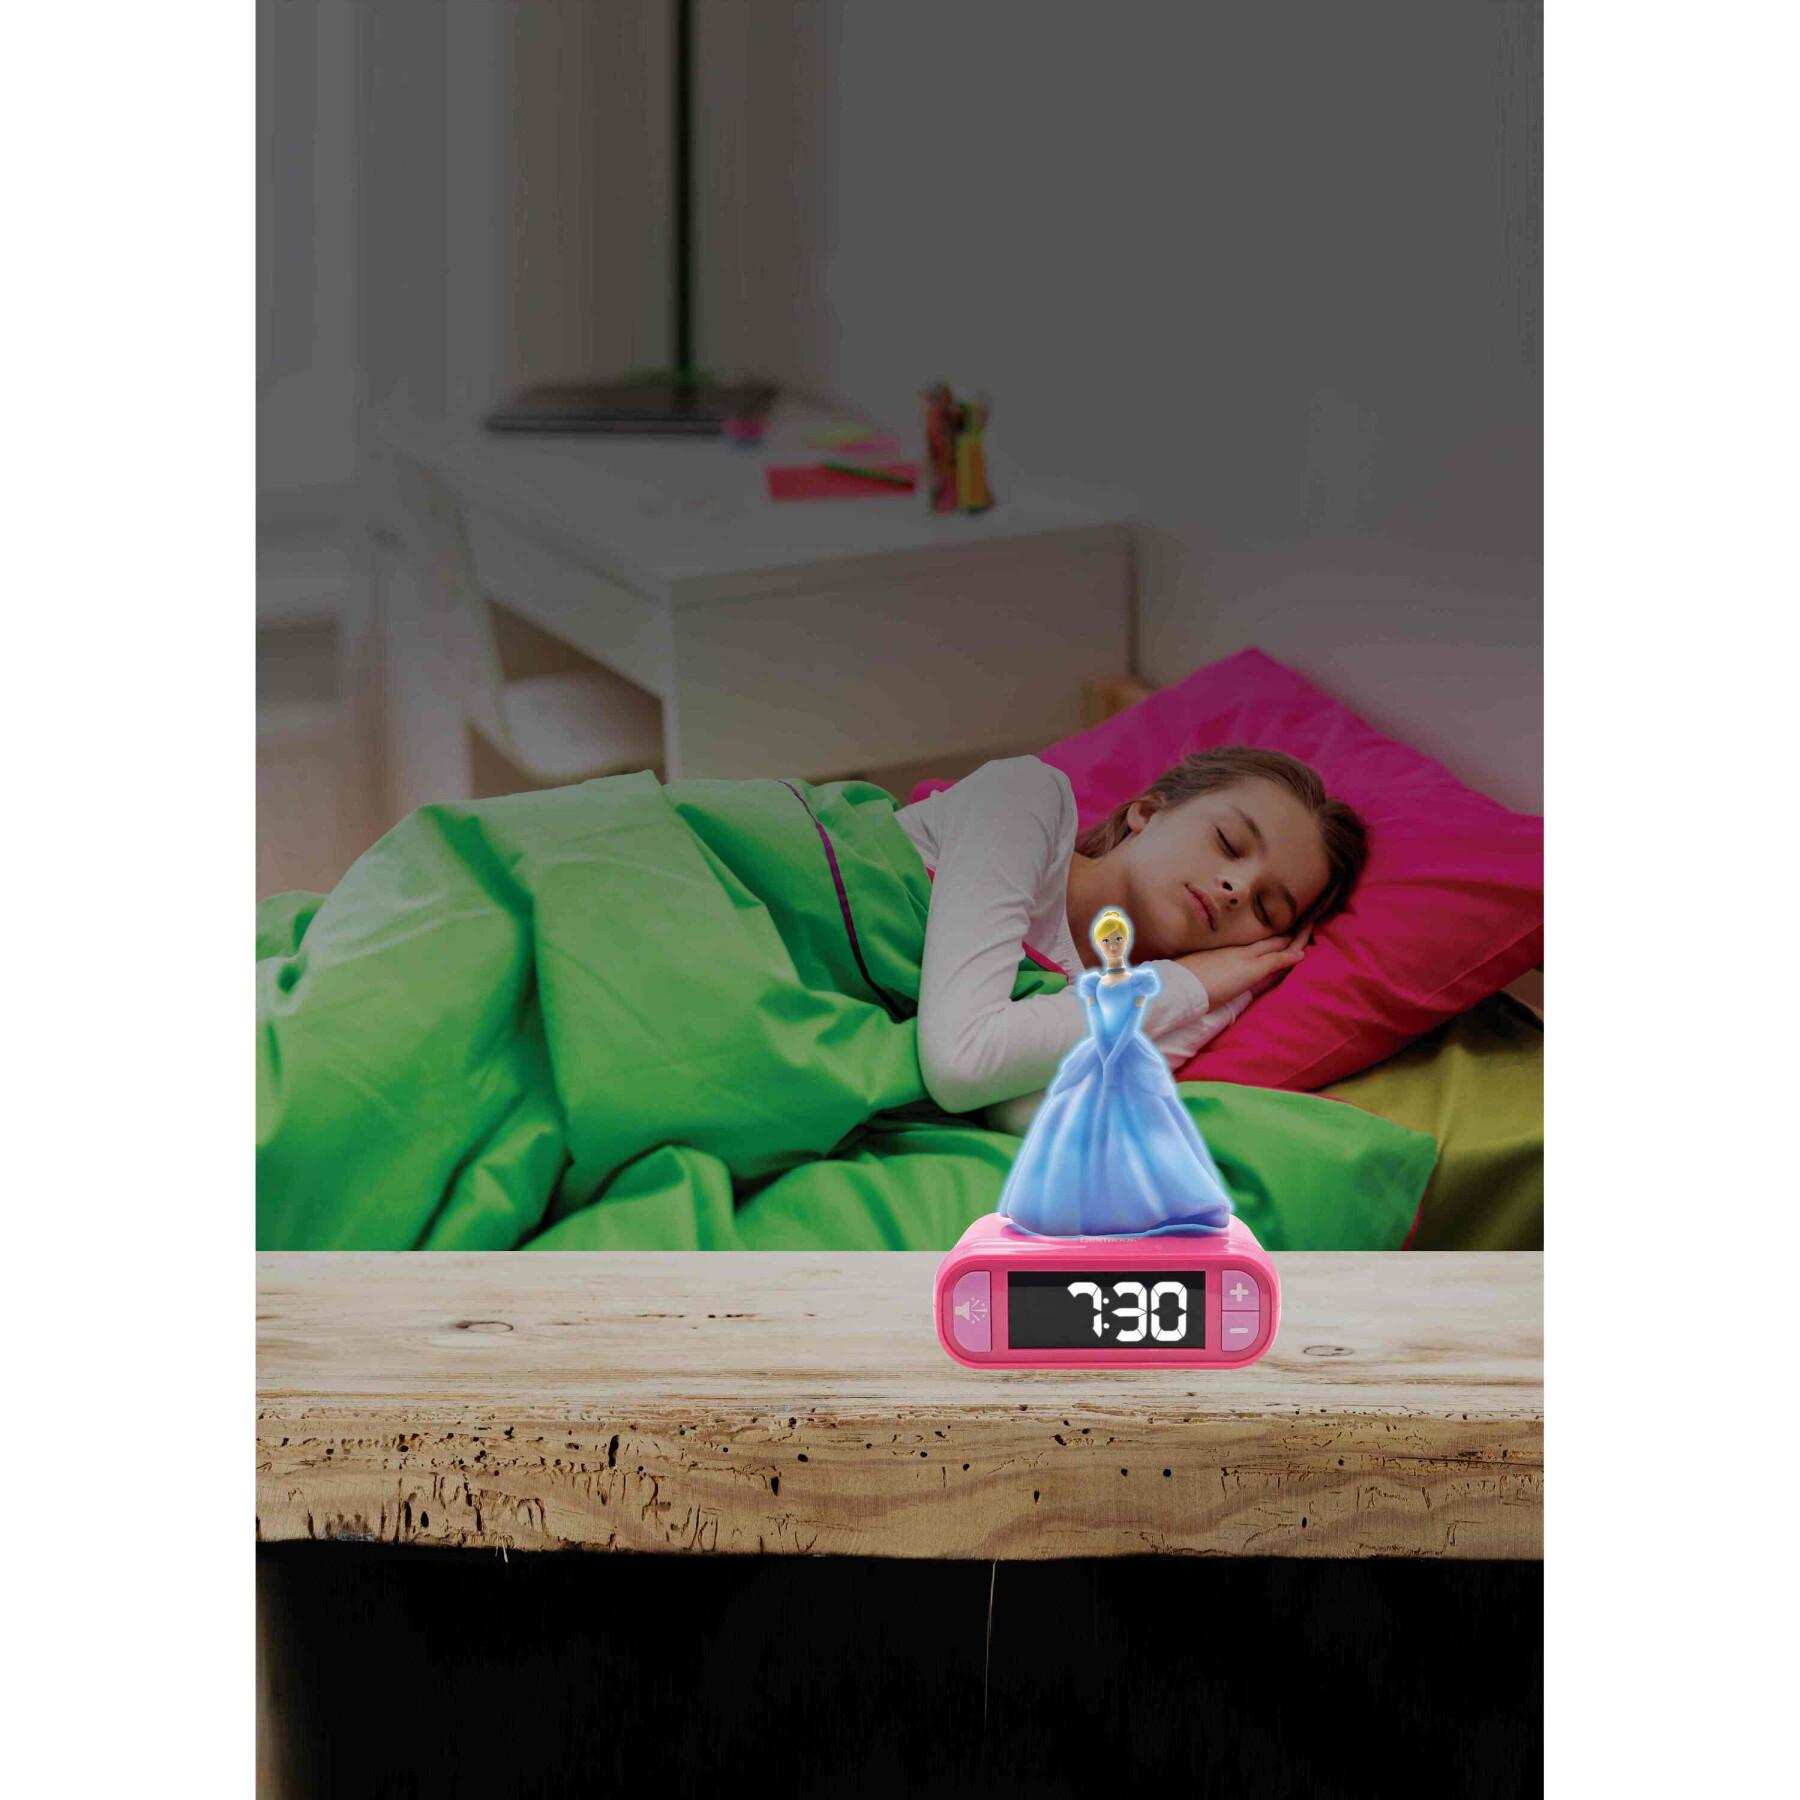 Sveglia con luce notturna in design 3d principesse Disney Cenerentola Lexibook